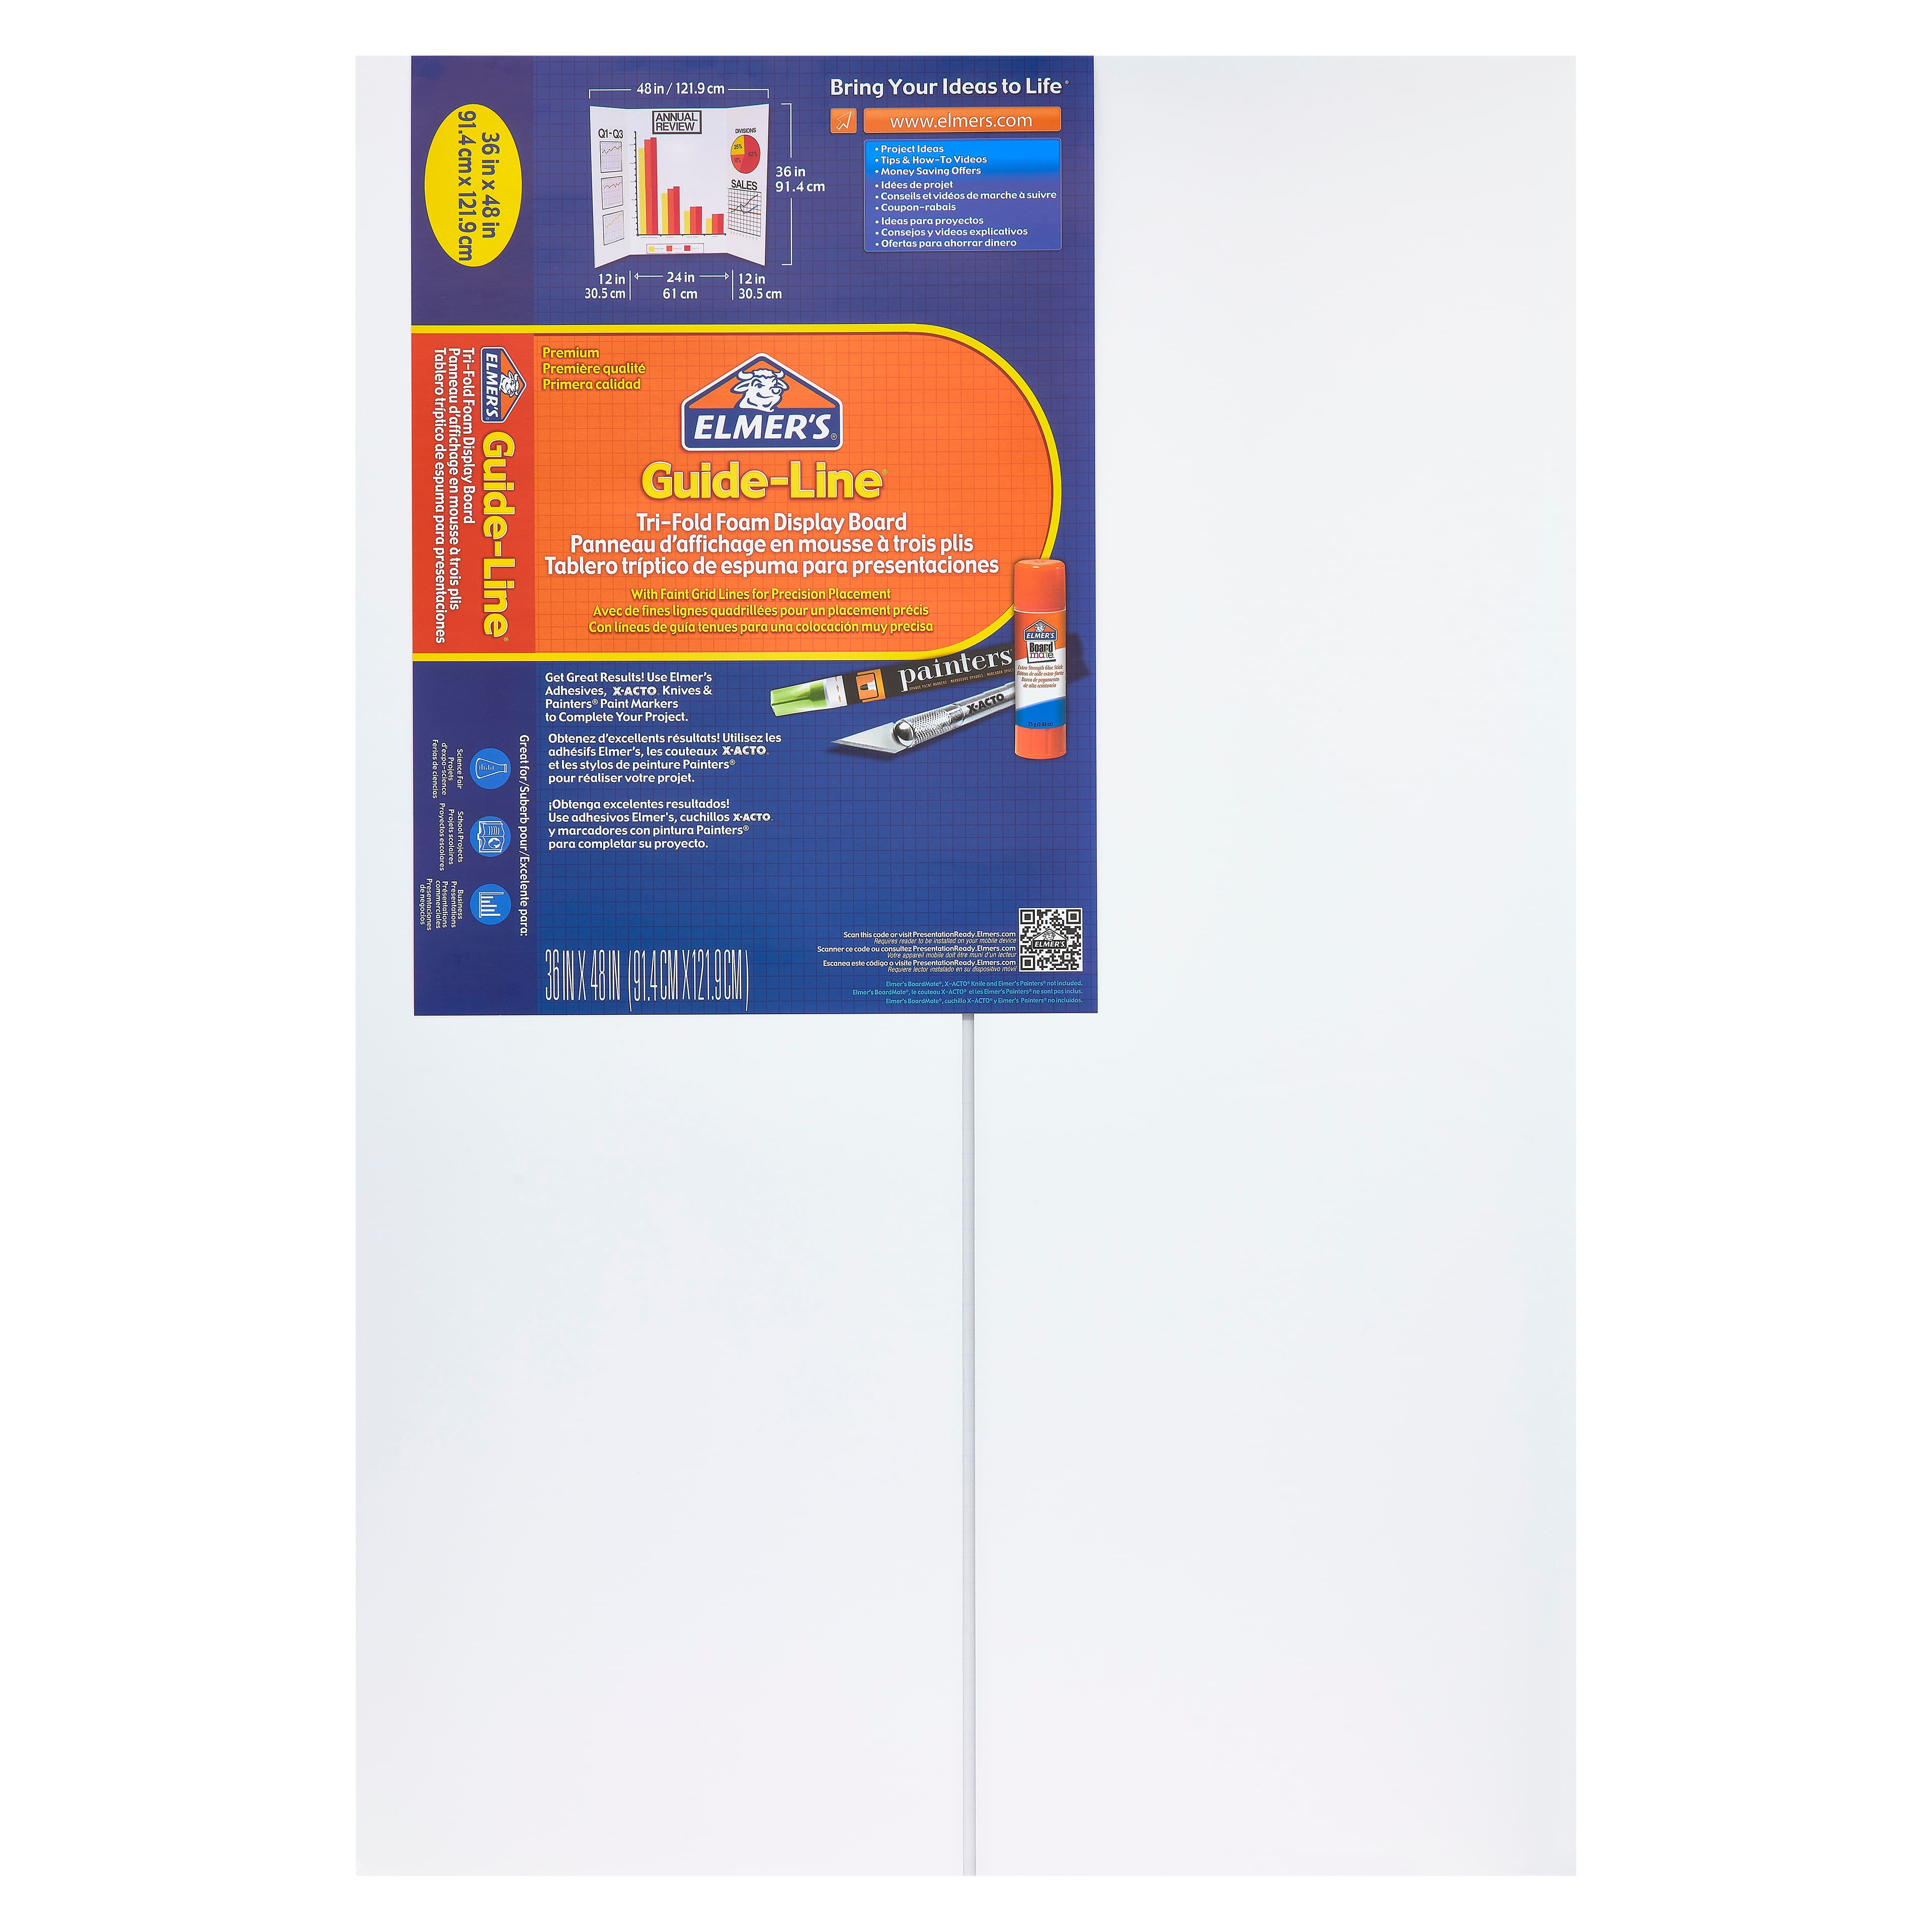 12 Pack: Elmer's Guide-Line 36 inch x 48 inch Foam Display Board, Size: 36 x 48, White